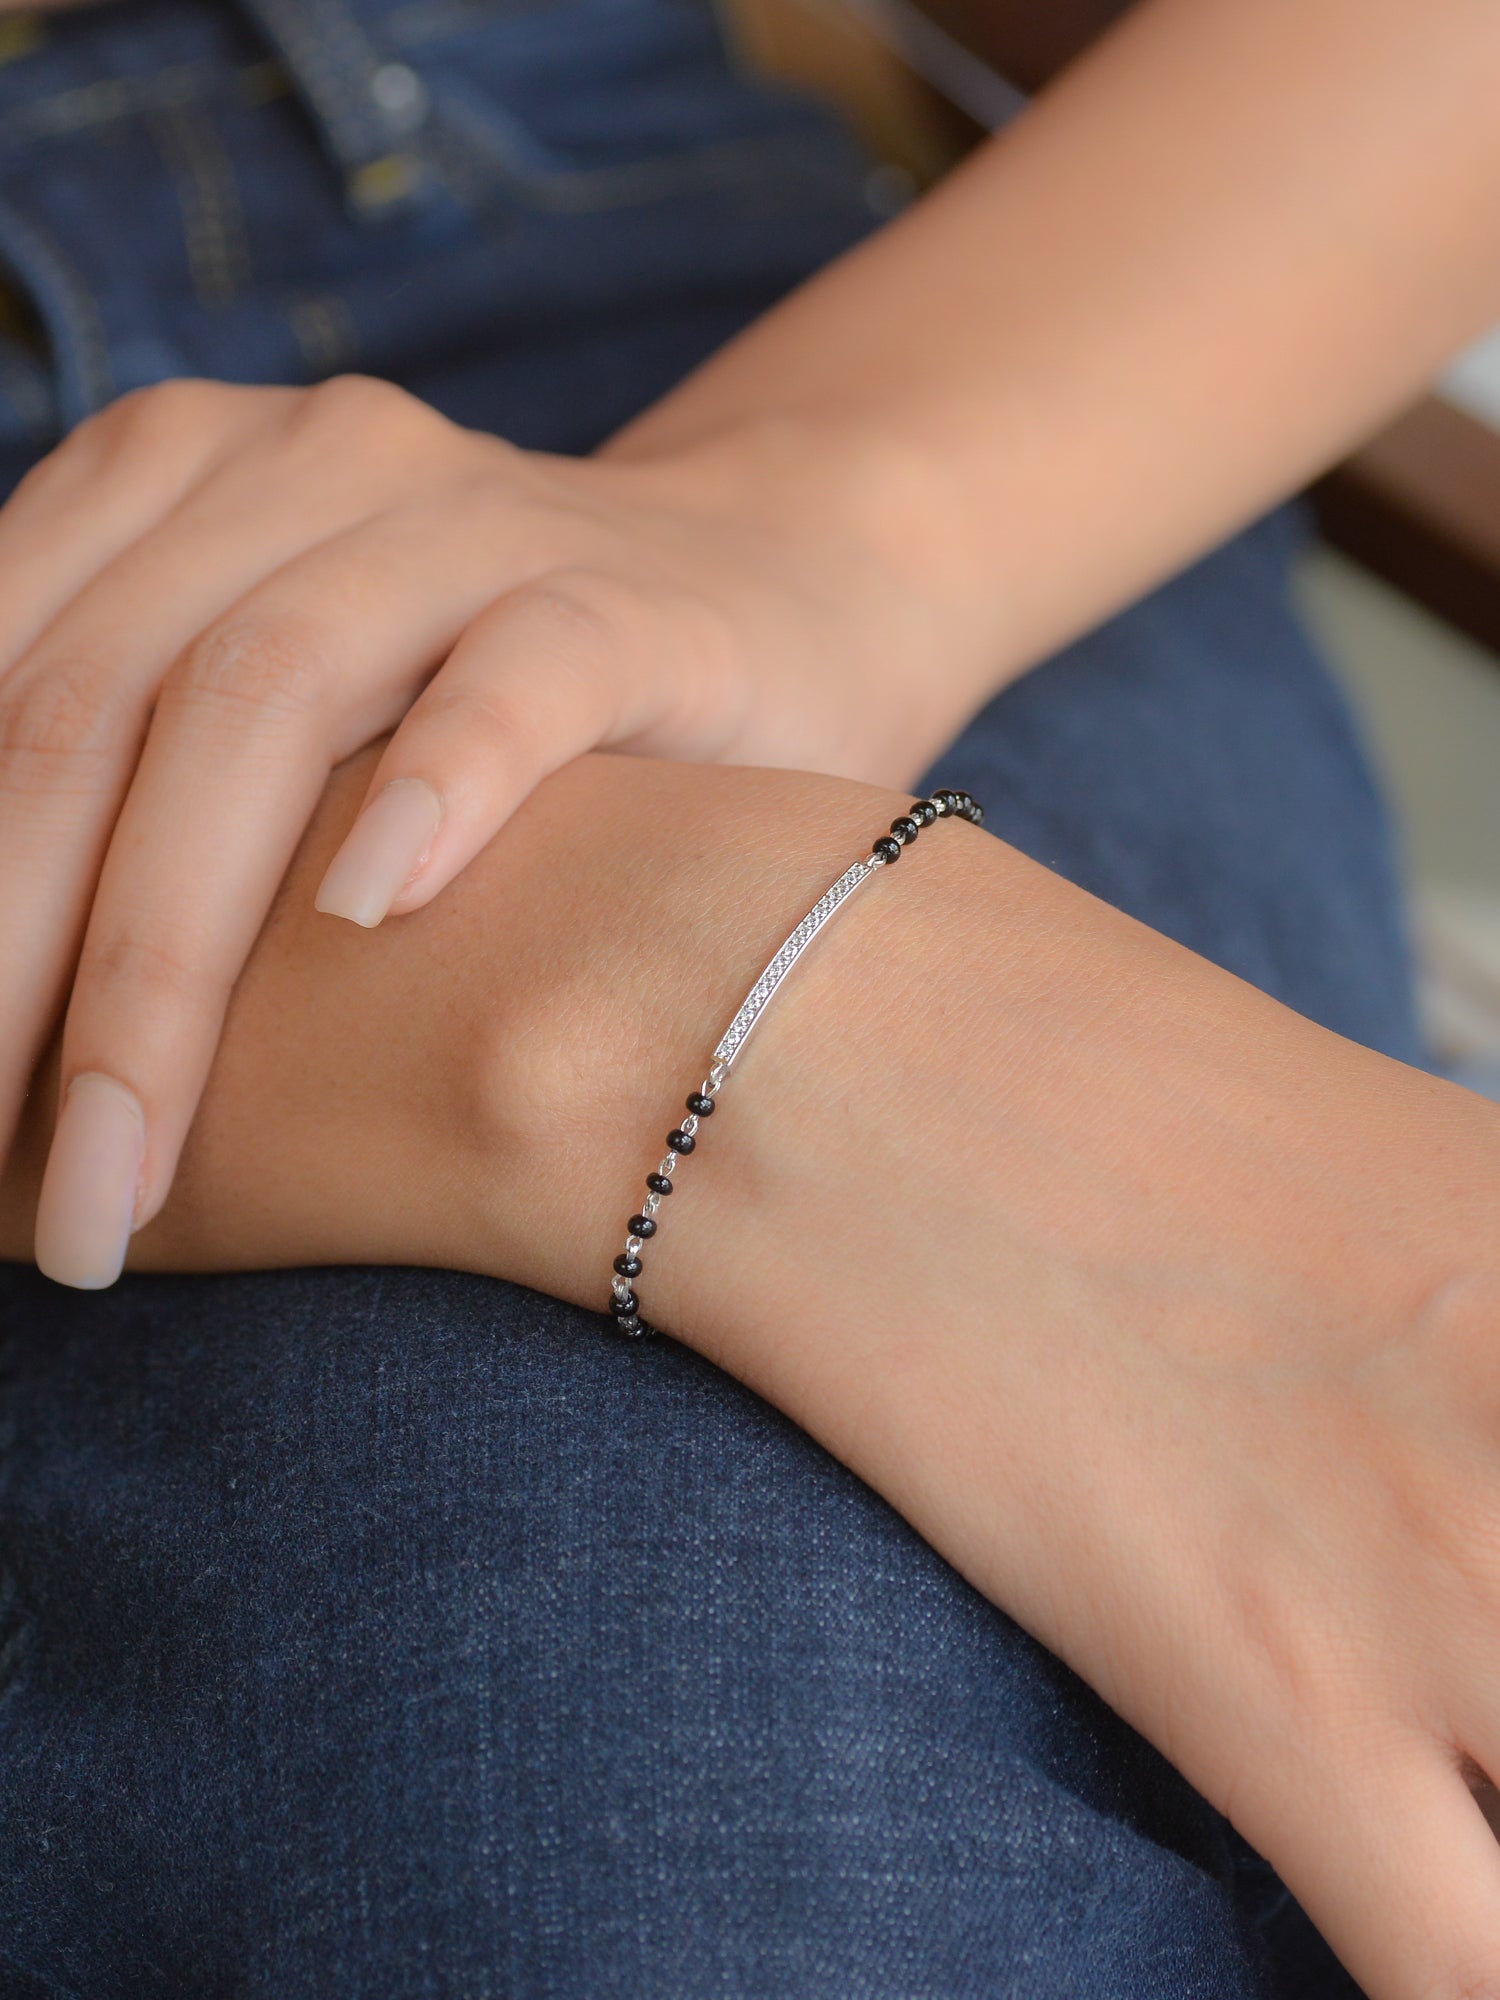 Customized hand bracelet mangalsutras - HoMafy